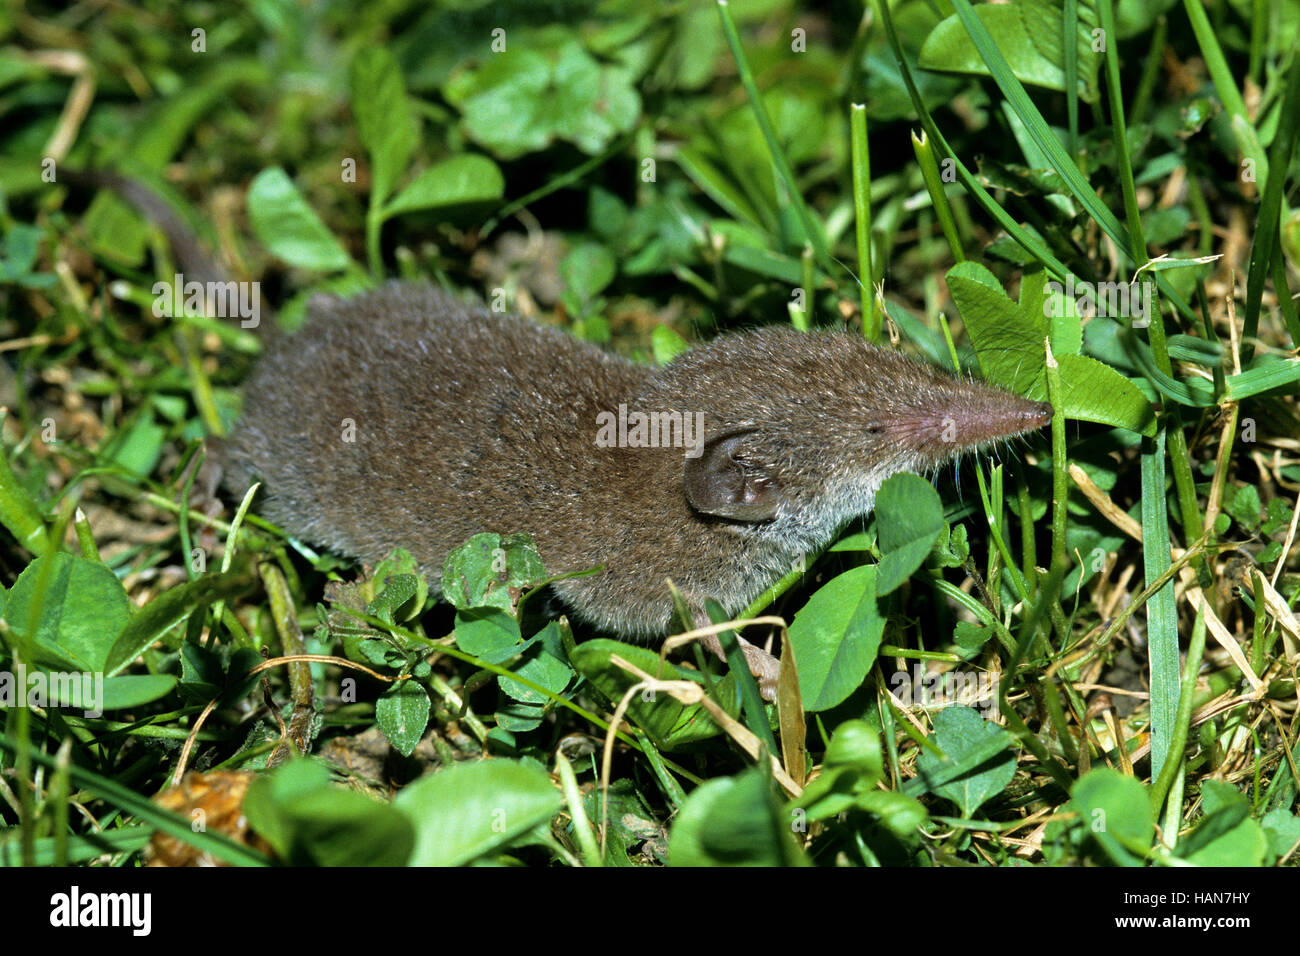 shrew, Crocidura russula Stock Photo